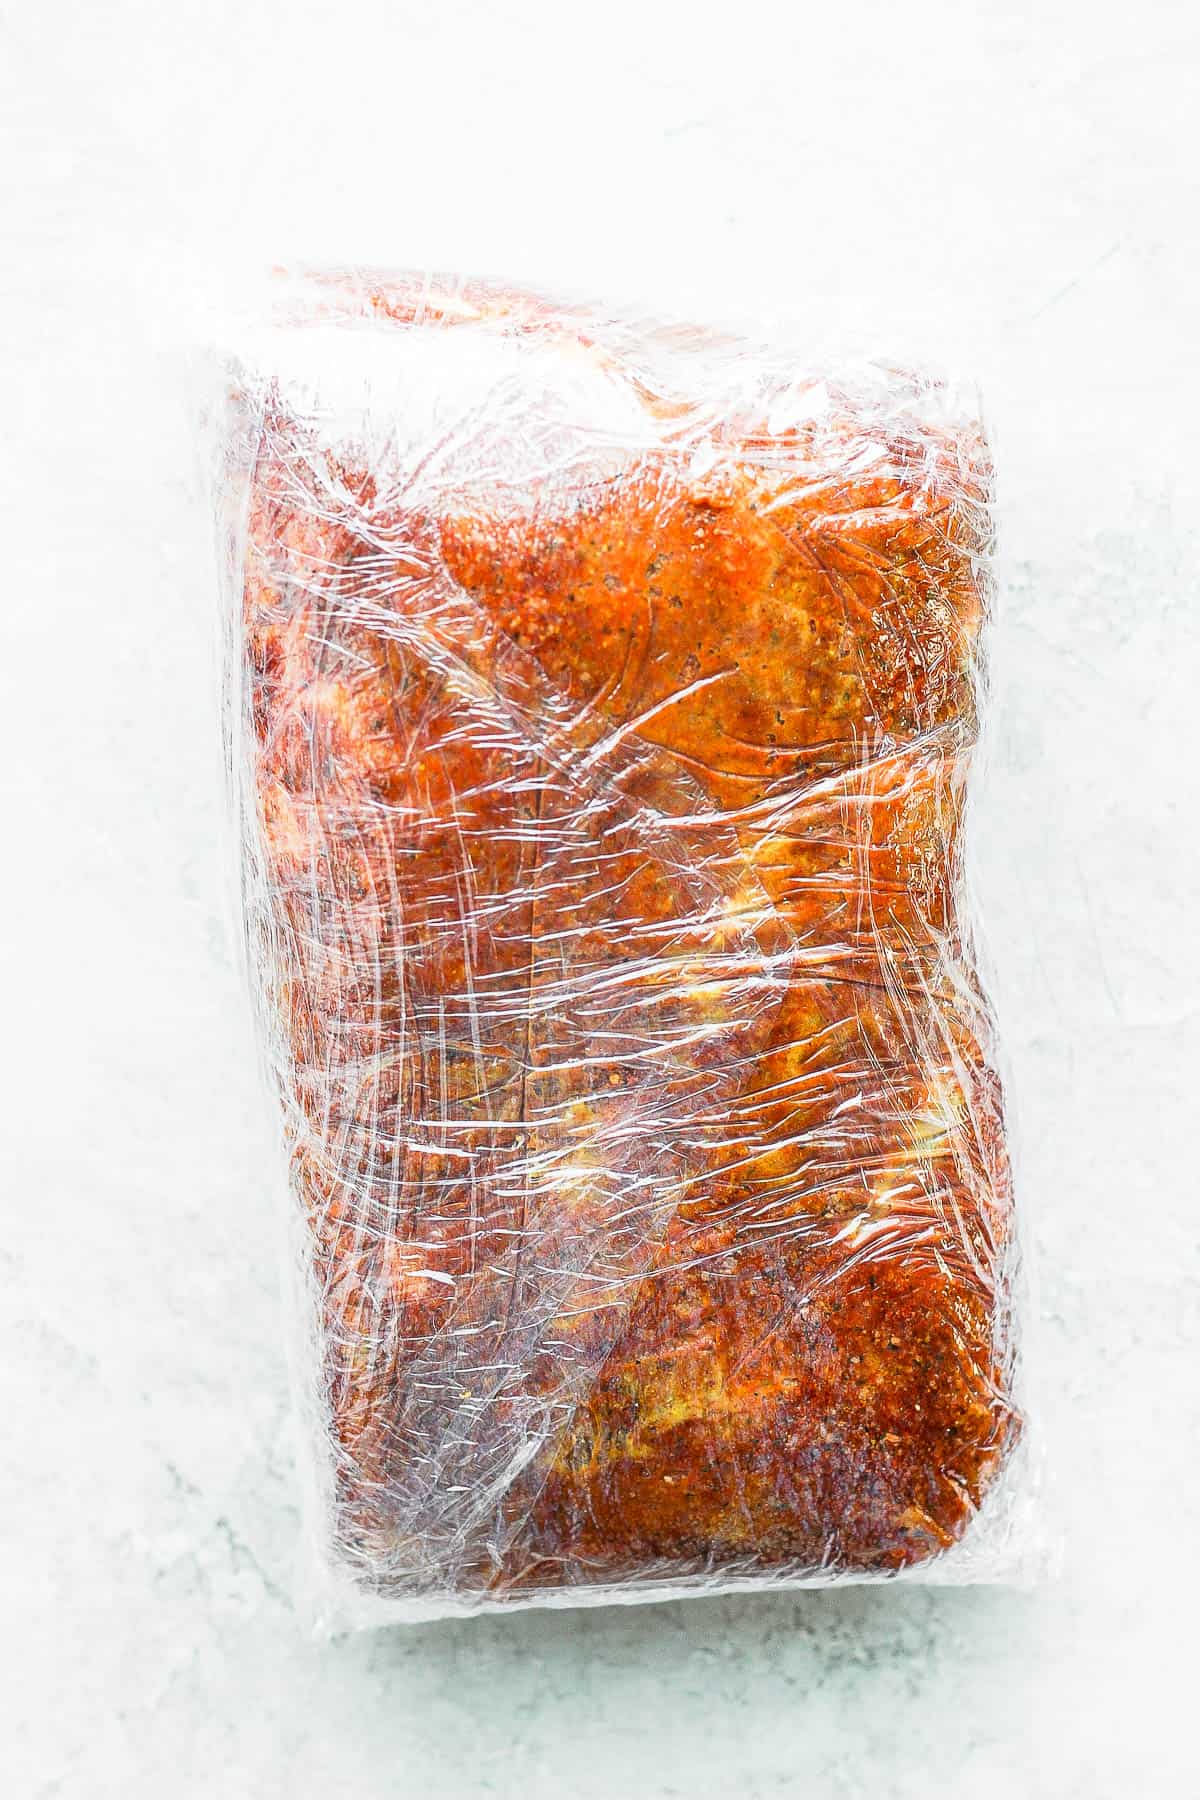 Prepared pork butt wrapped in plastic wrap.